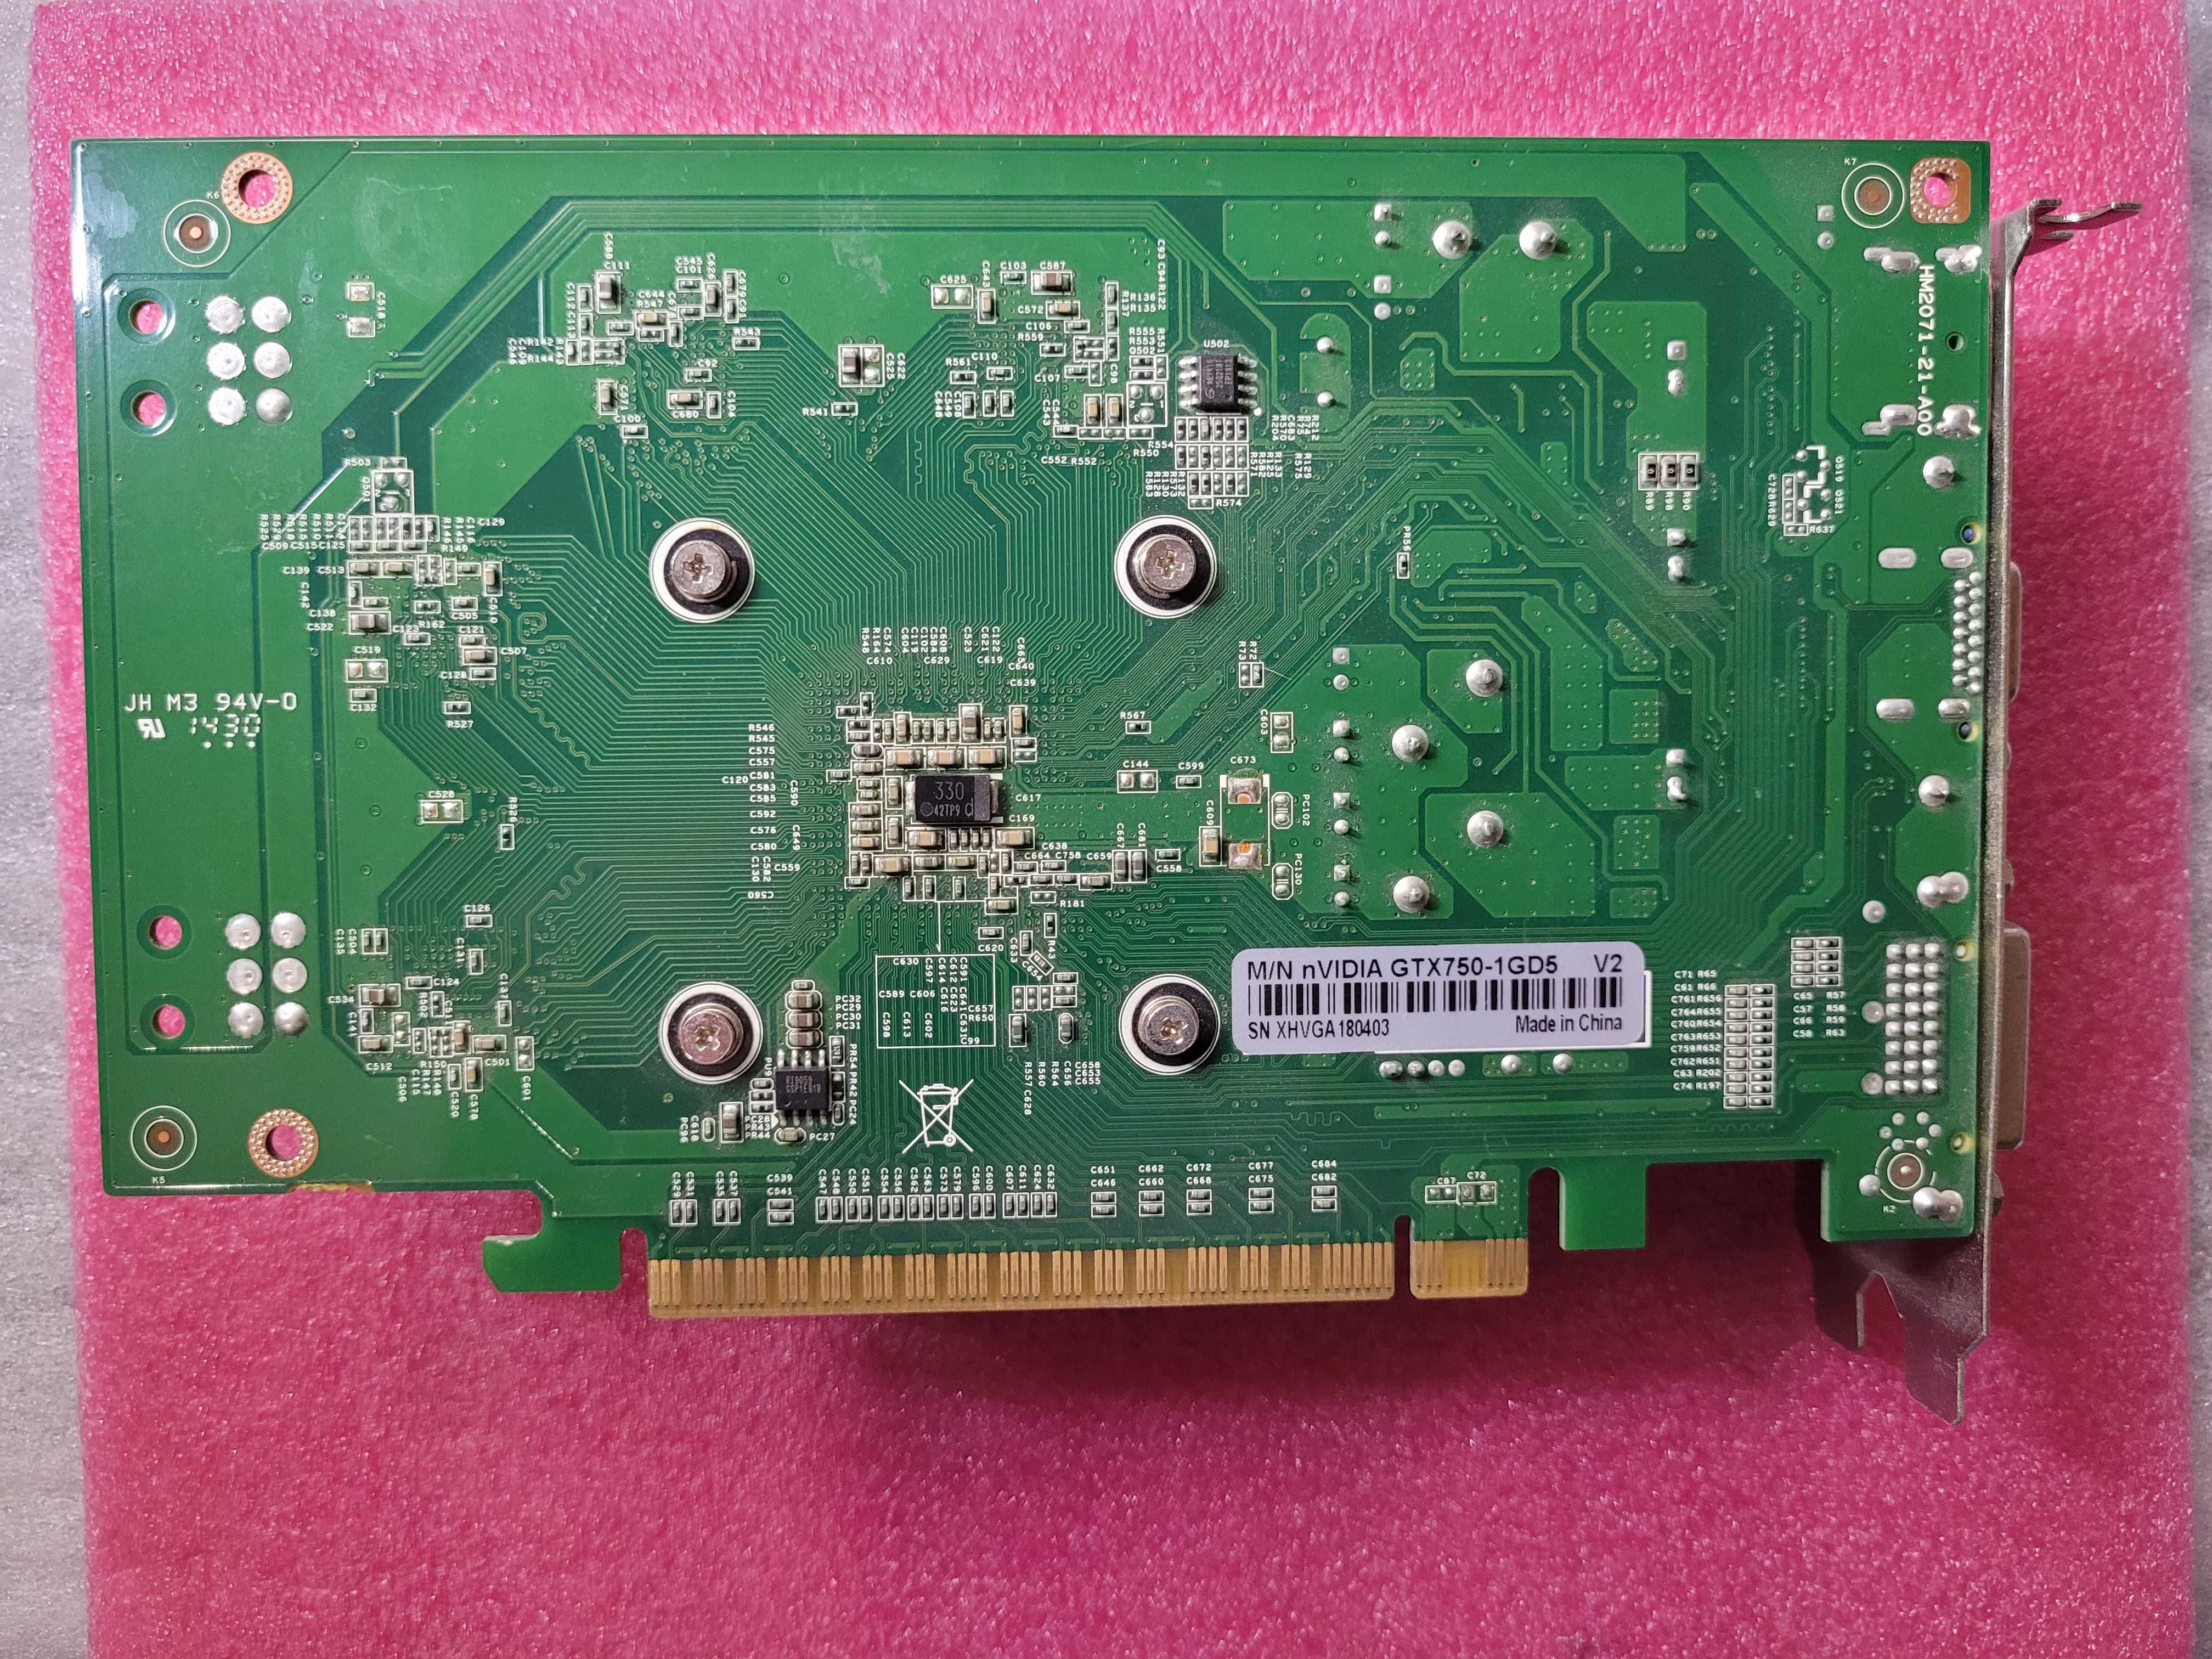 Asus GTX 750 1Gb DDR5 видеокарта, бу, в отл.состоянии, кулера не шумят